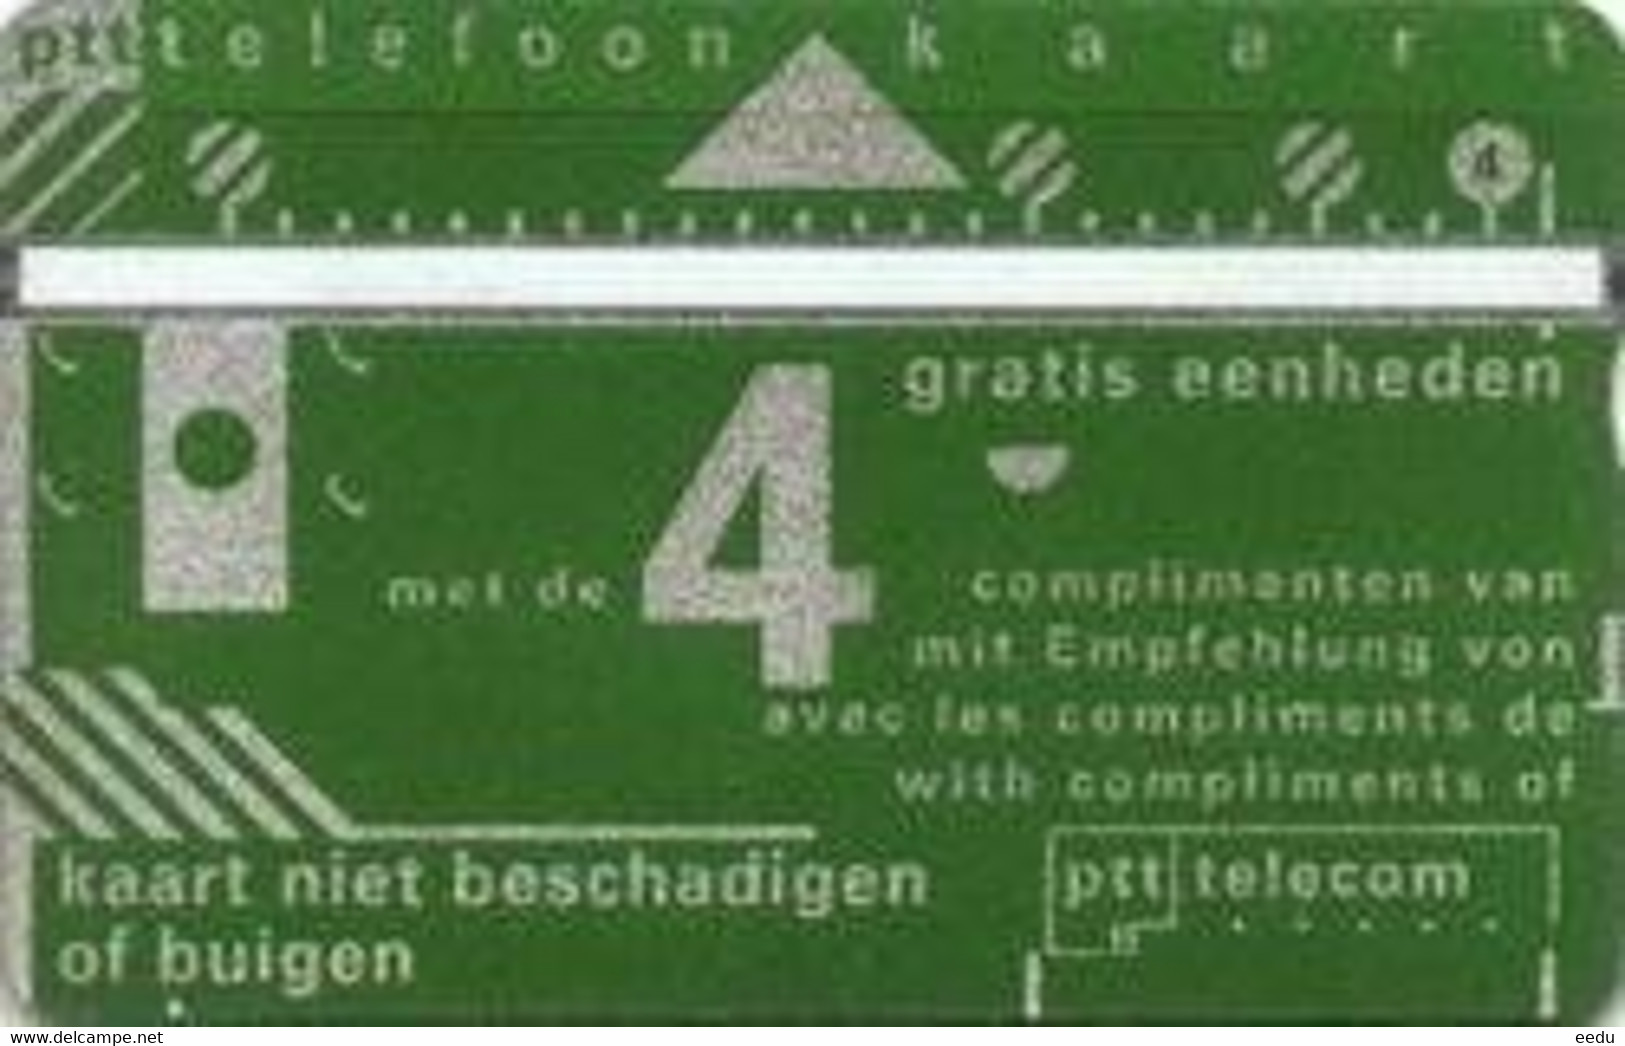 Netherlands Phonecard - Public